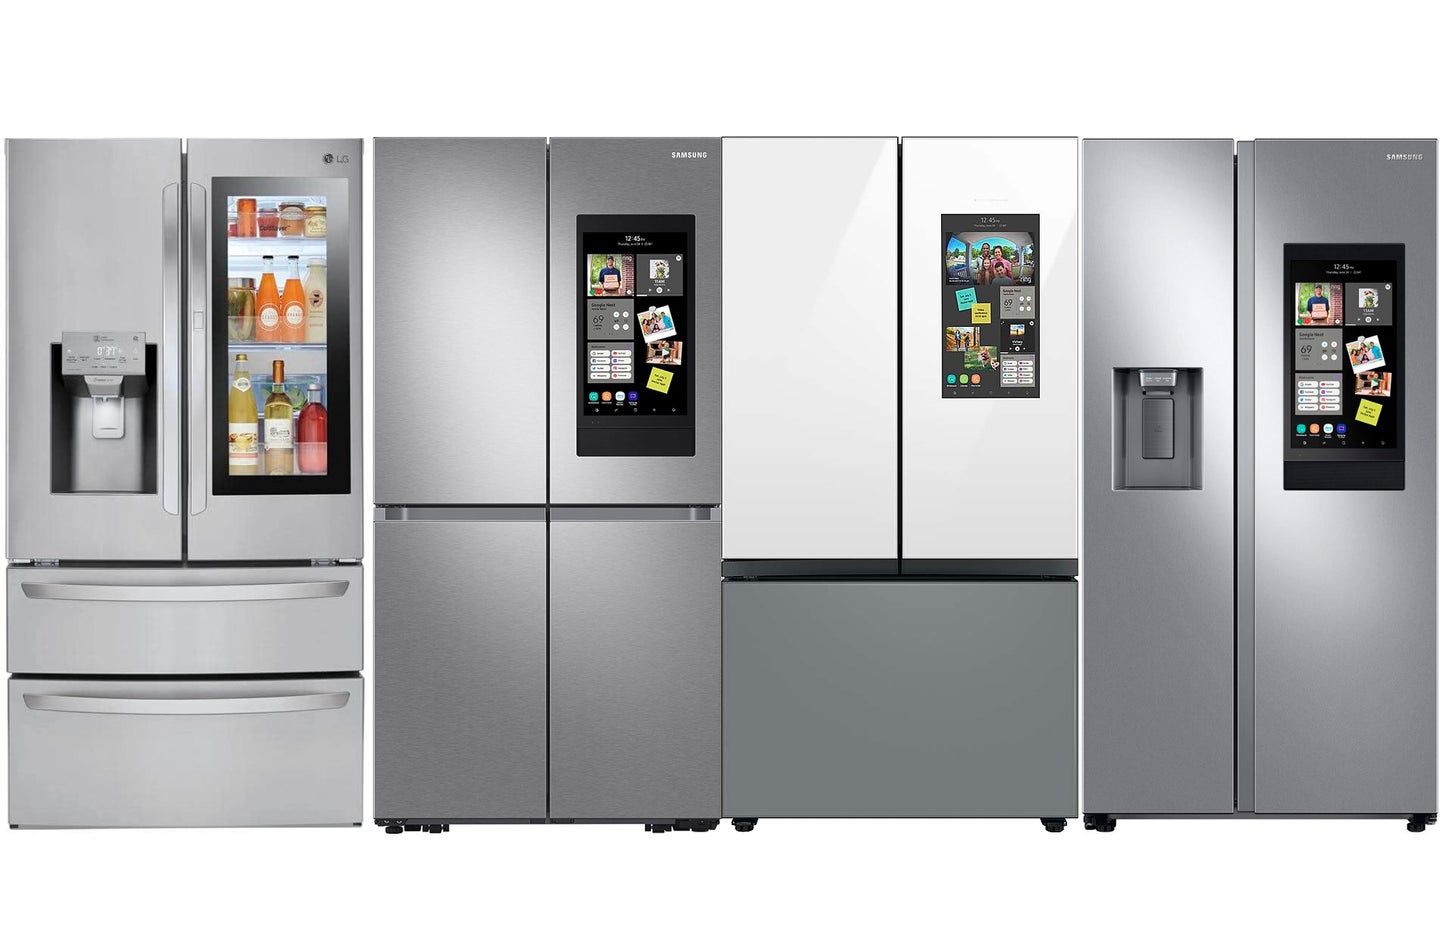 The best smart refrigerators